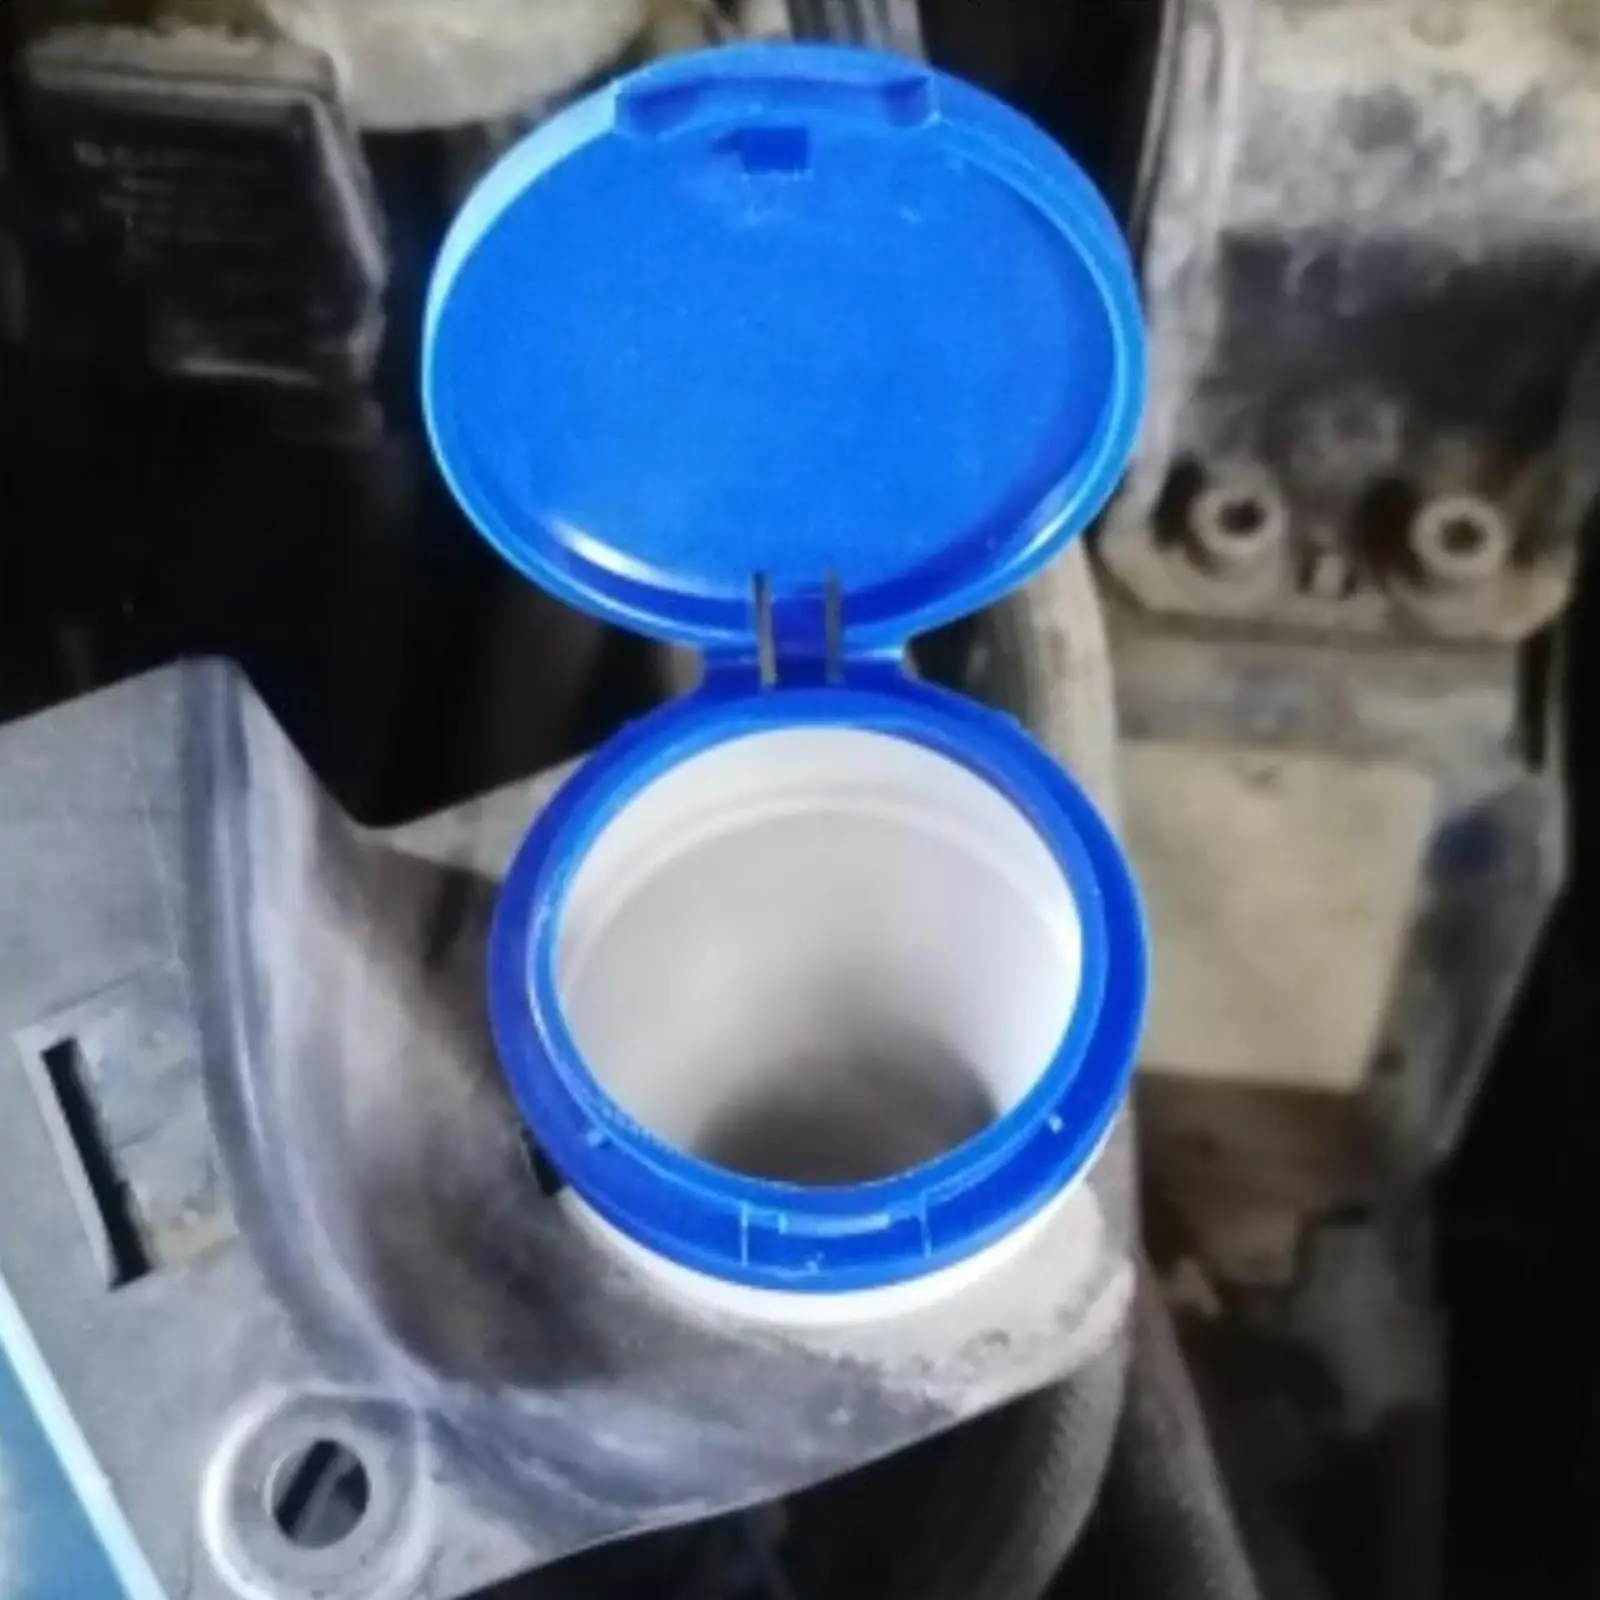 643238 Washer Fluid Bottle Cap Blue ABS Durable Windshield Wiper Reservoir Cap for Peugeot Replace Auto Accessories Parts